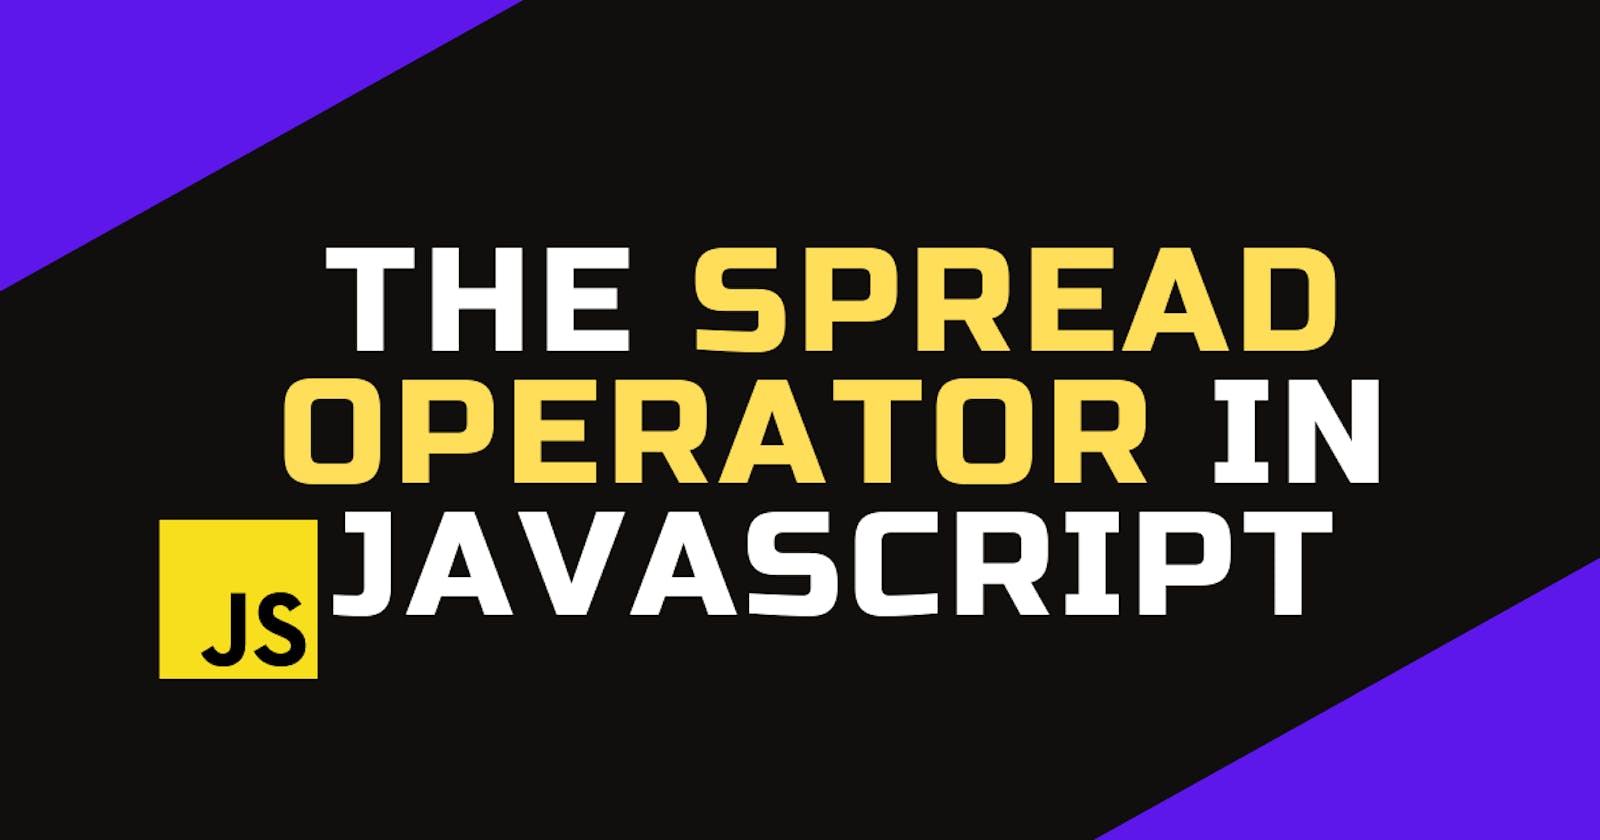 The spread operator in JavaScript